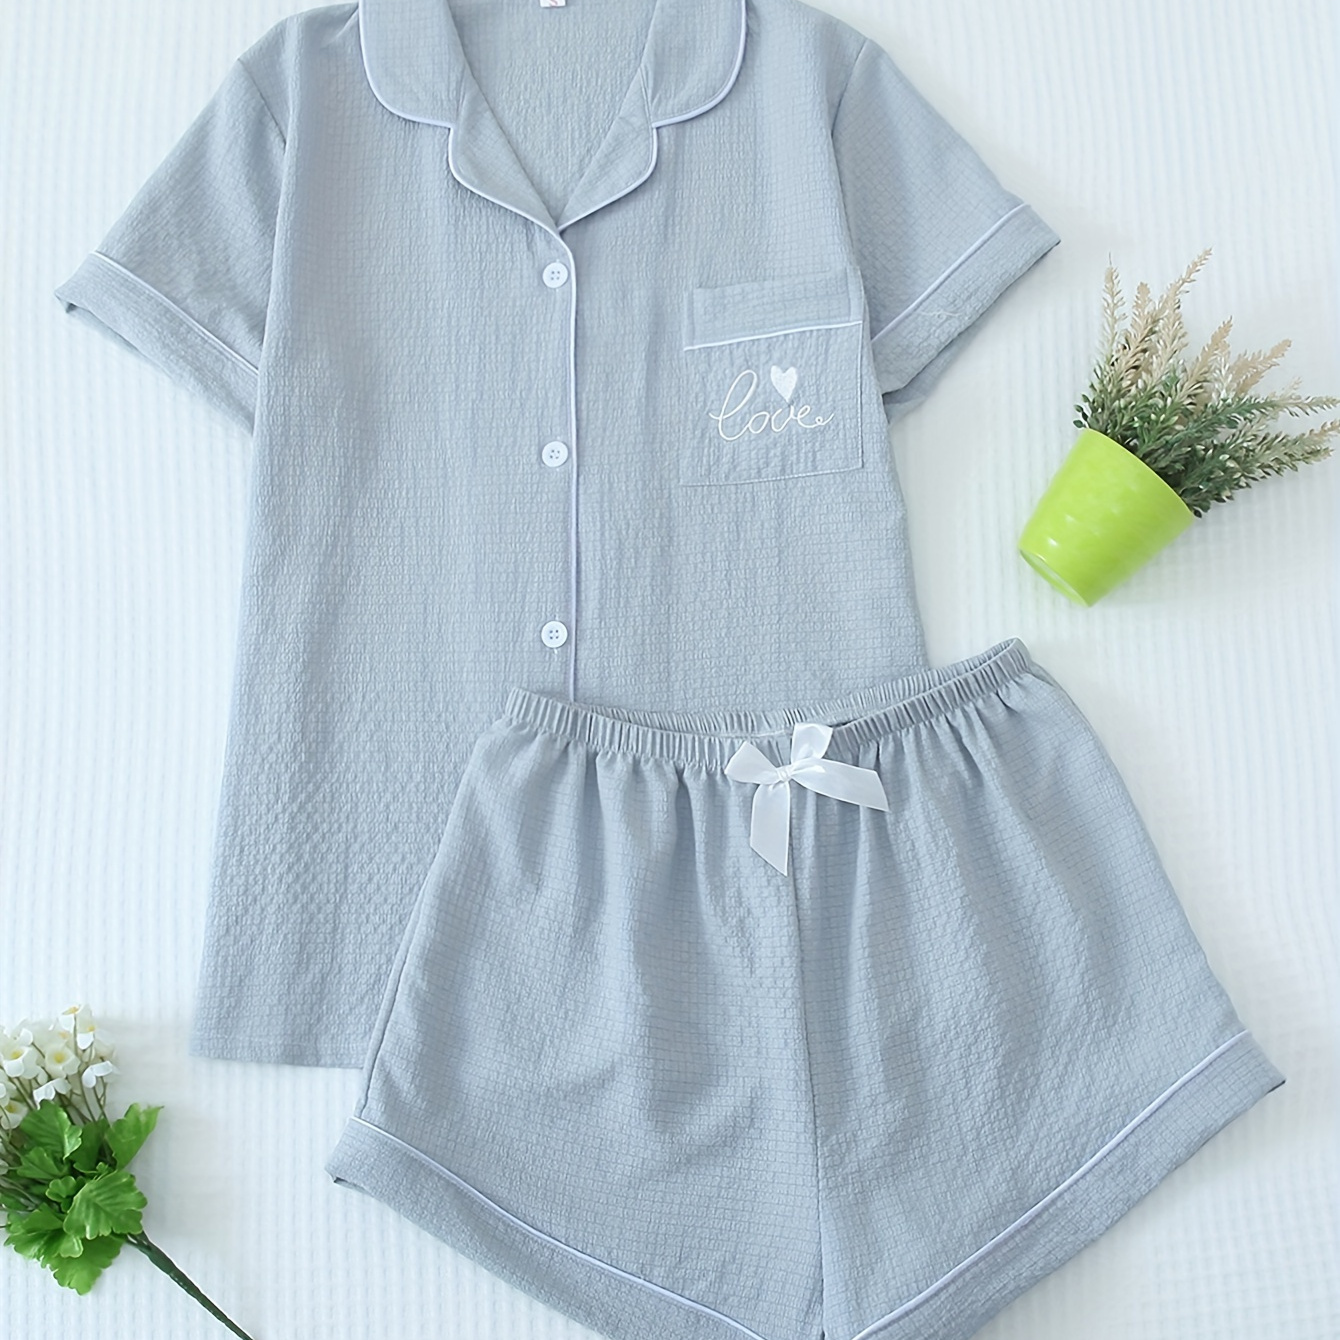 

Heart & Letter Print Textured Pajama Set, Casual Short Sleeve Buttons Lapel Top & Elastic Shorts, Women's Sleepwear